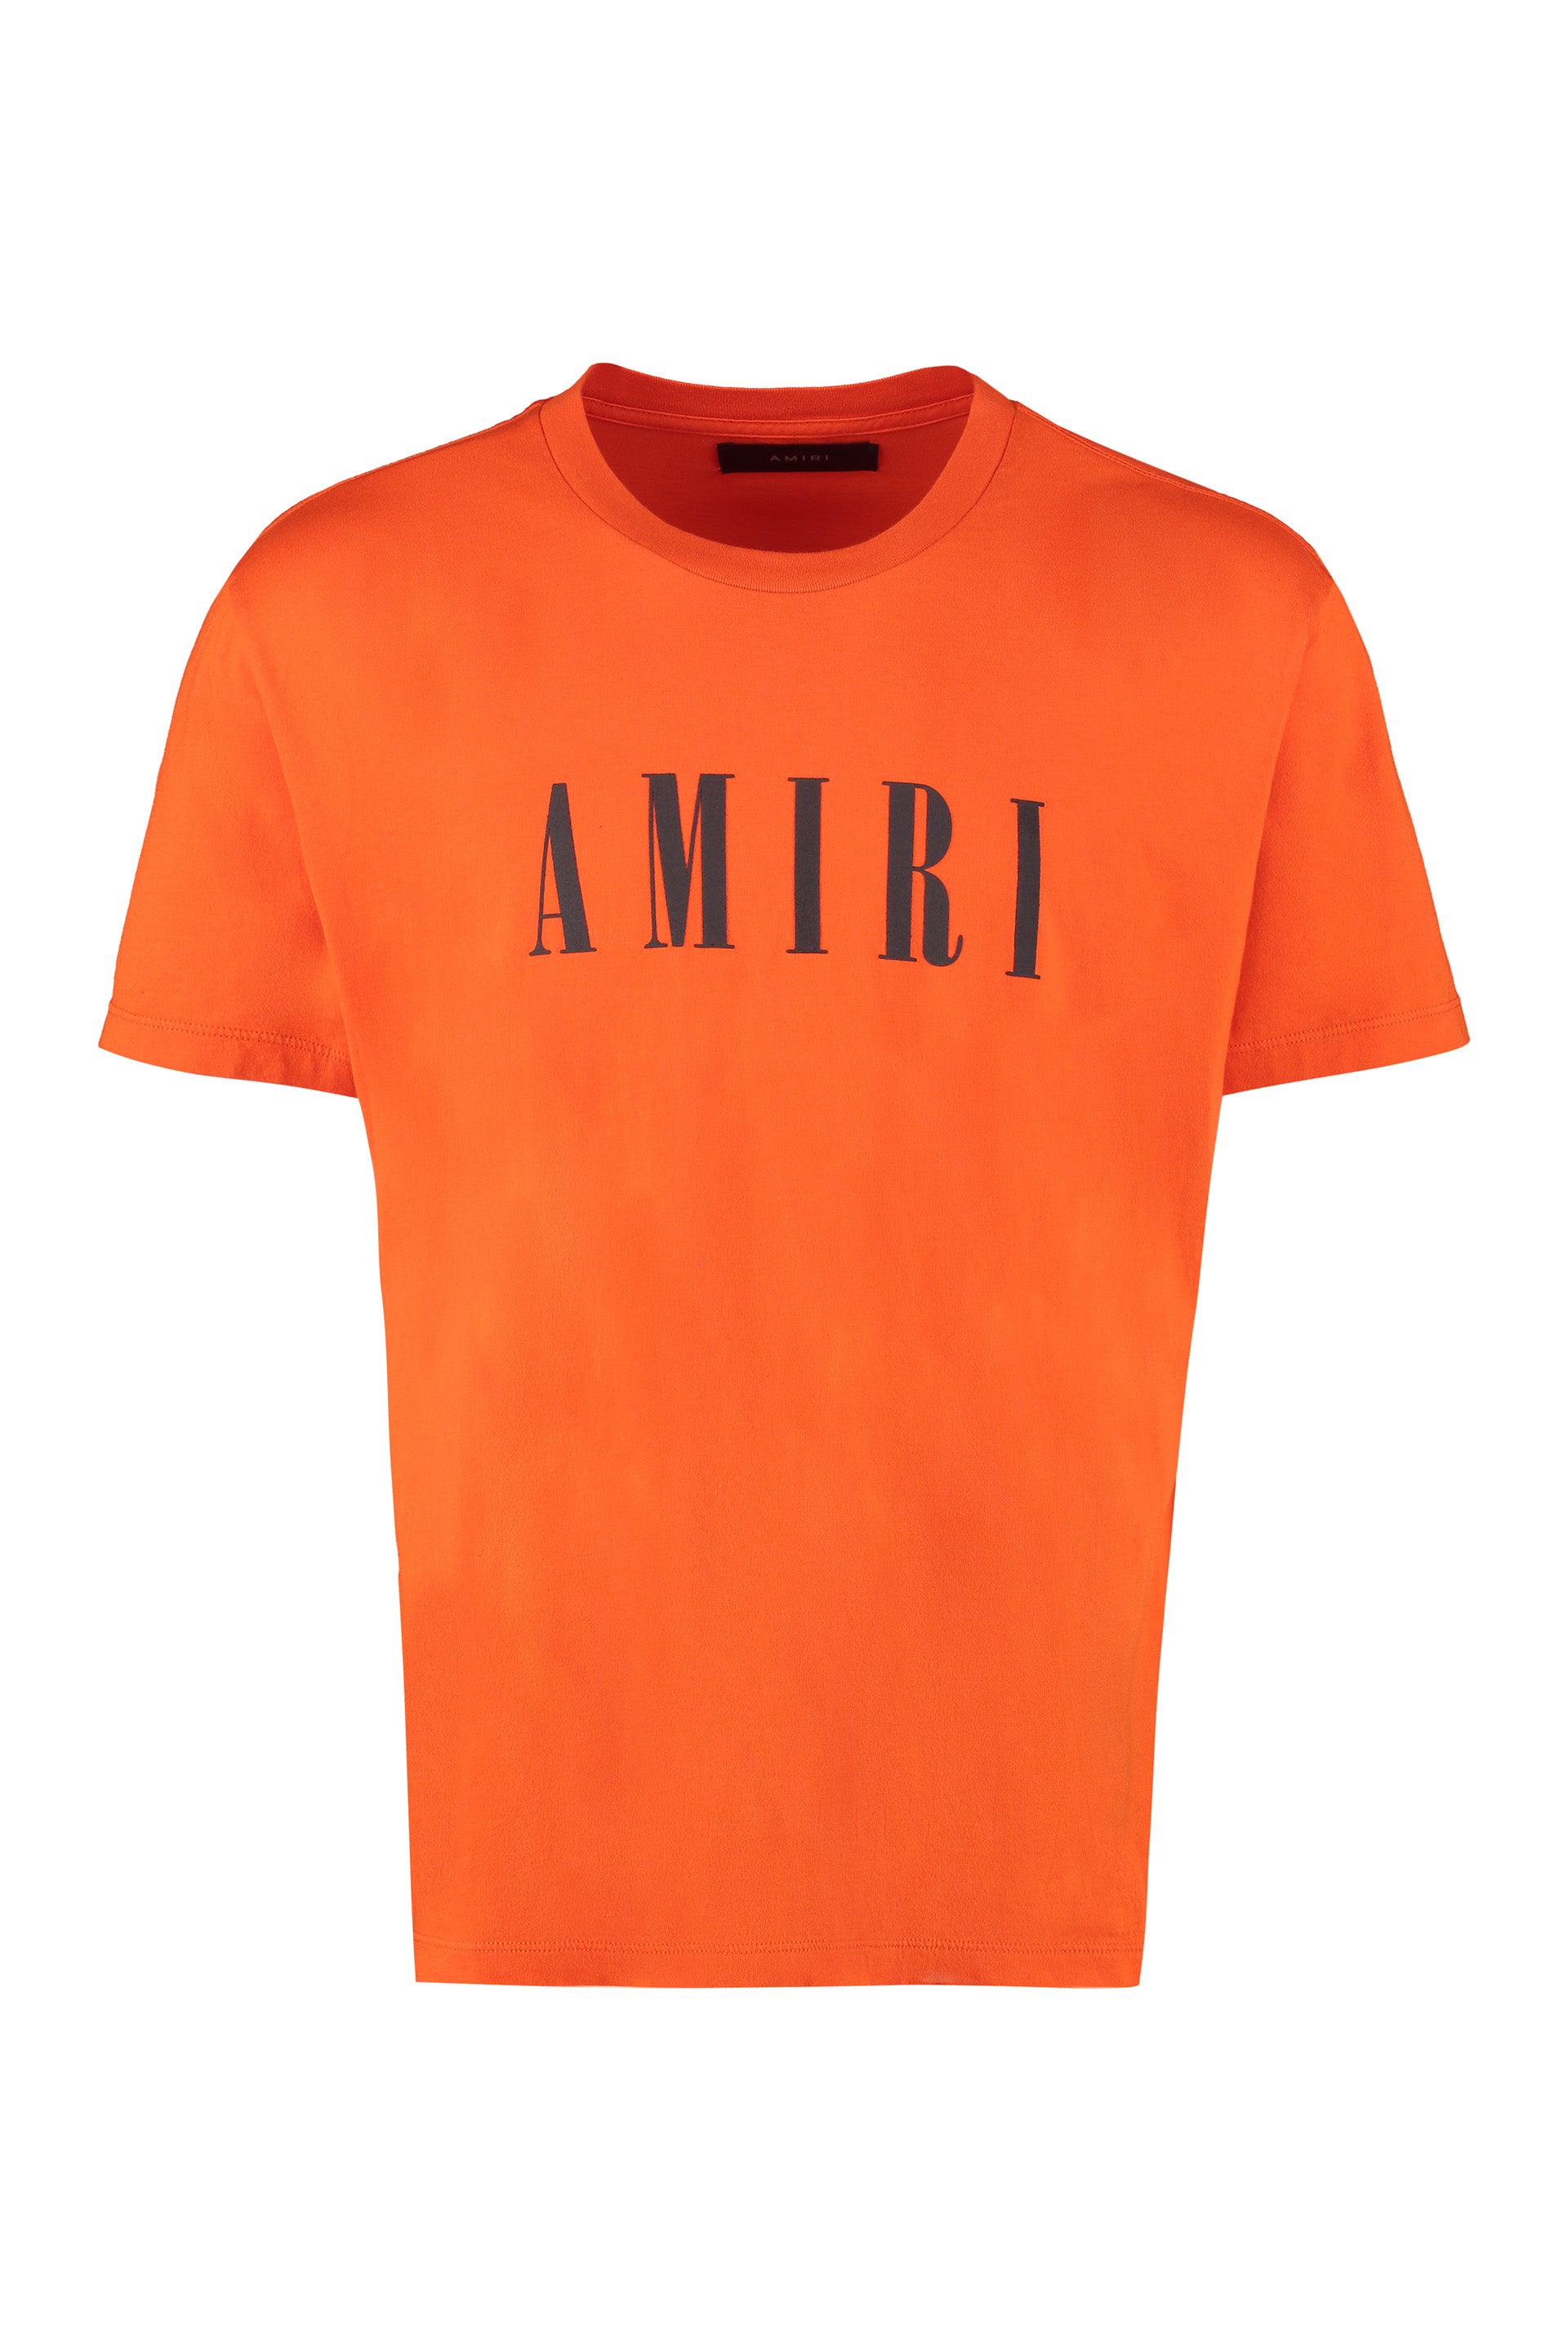 AMIRI - Logo cotton t-shirt Orange - The Corner